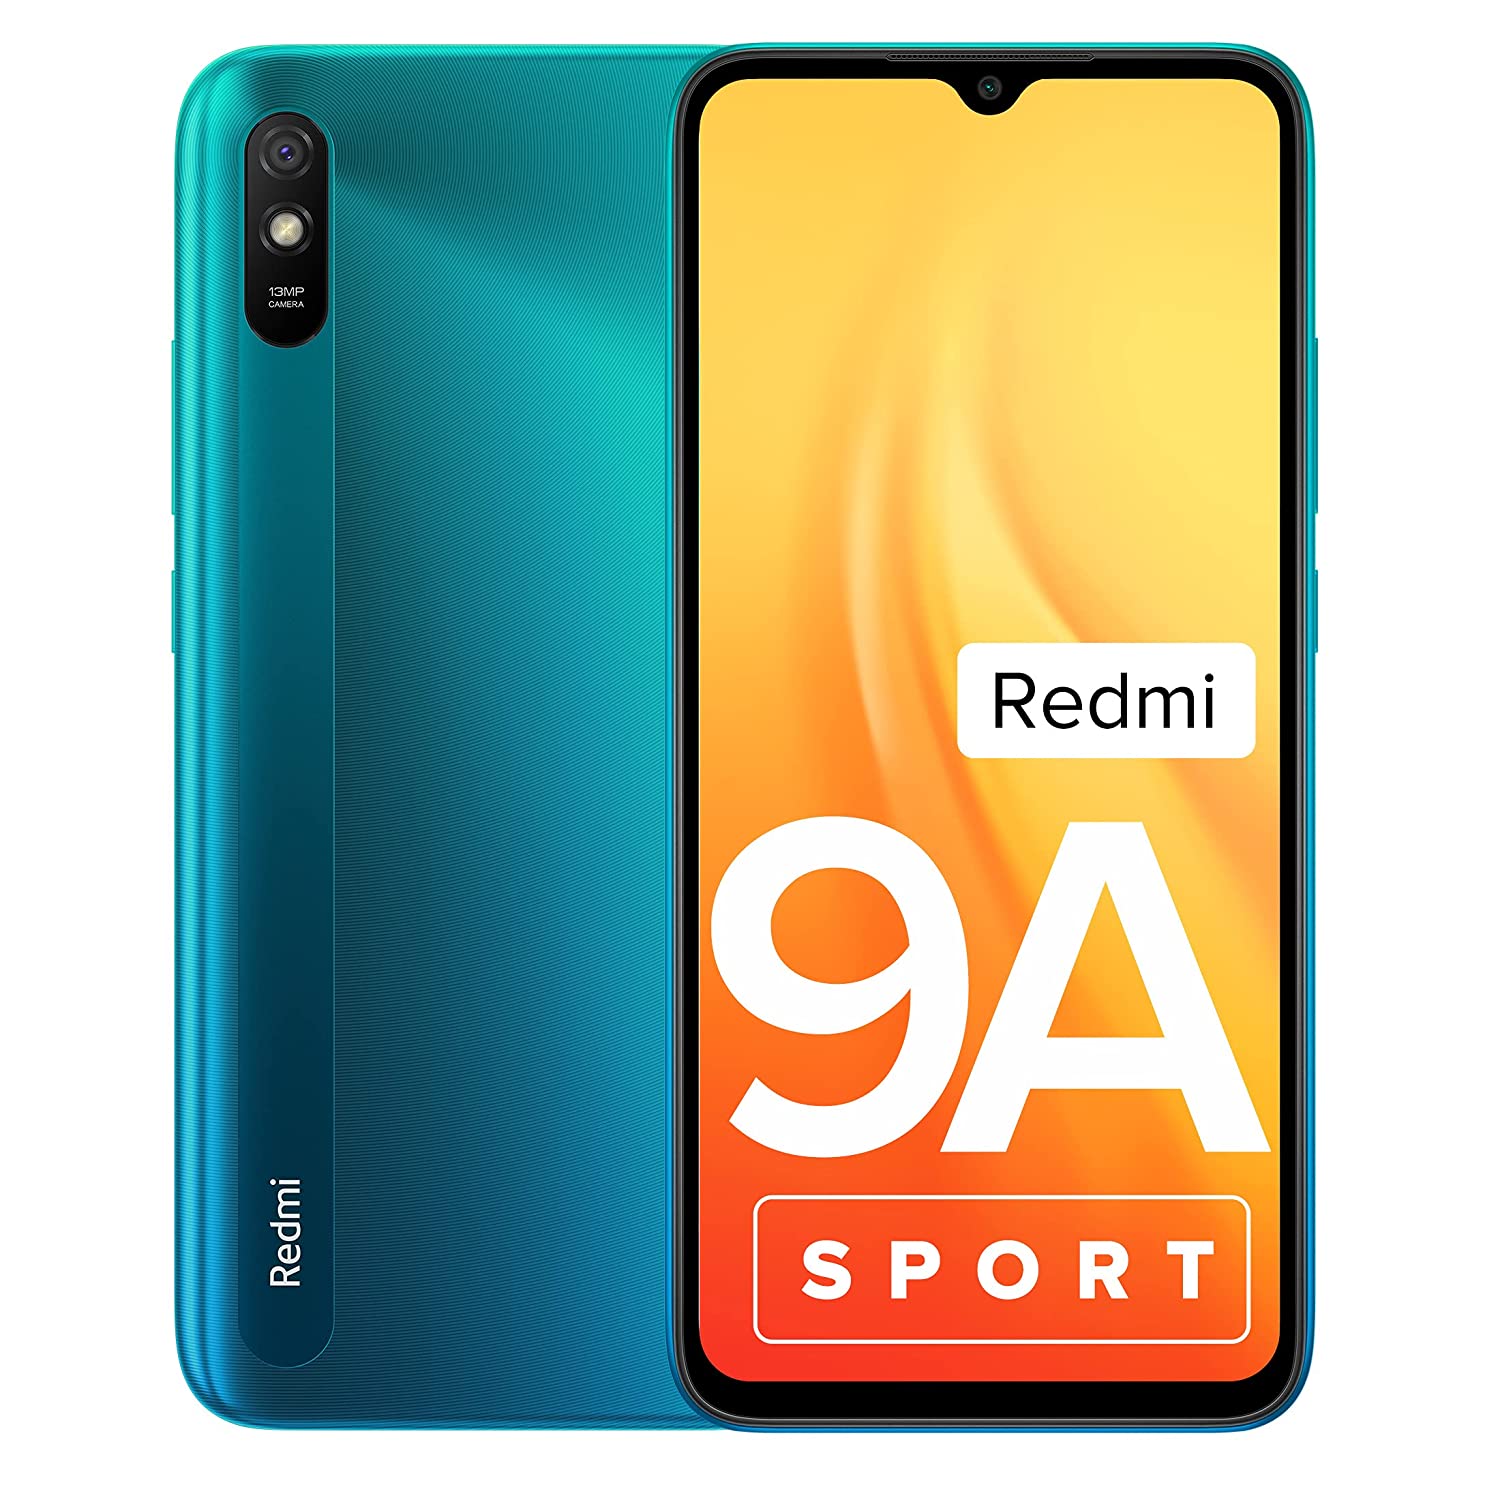 Redmi 9A Sport (Coral Green, 2GB RAM, 32GB Storage) | 2GHz Octa-core Helio G25 Processor | 5000 mAh Battery Colour:Coral Green Style name:2GB RAM, 32GB Storage Pattern name:Redmi 9A Sport